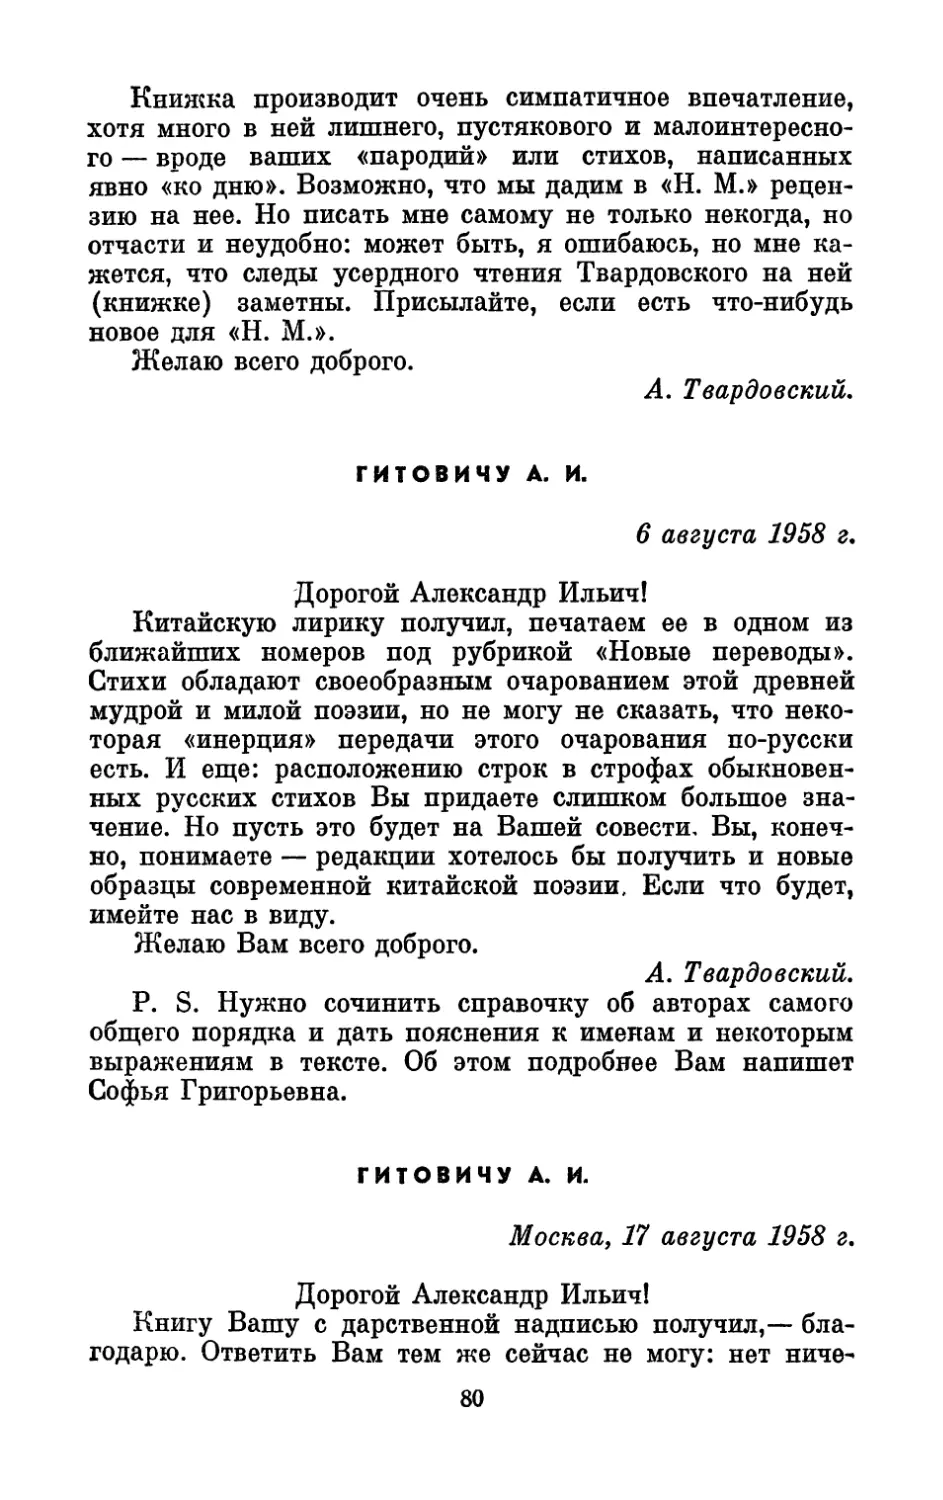 Гитовичу А. И., 6 августа 1958 г.
Гитовичу А. И., 17 августа 1958 г.